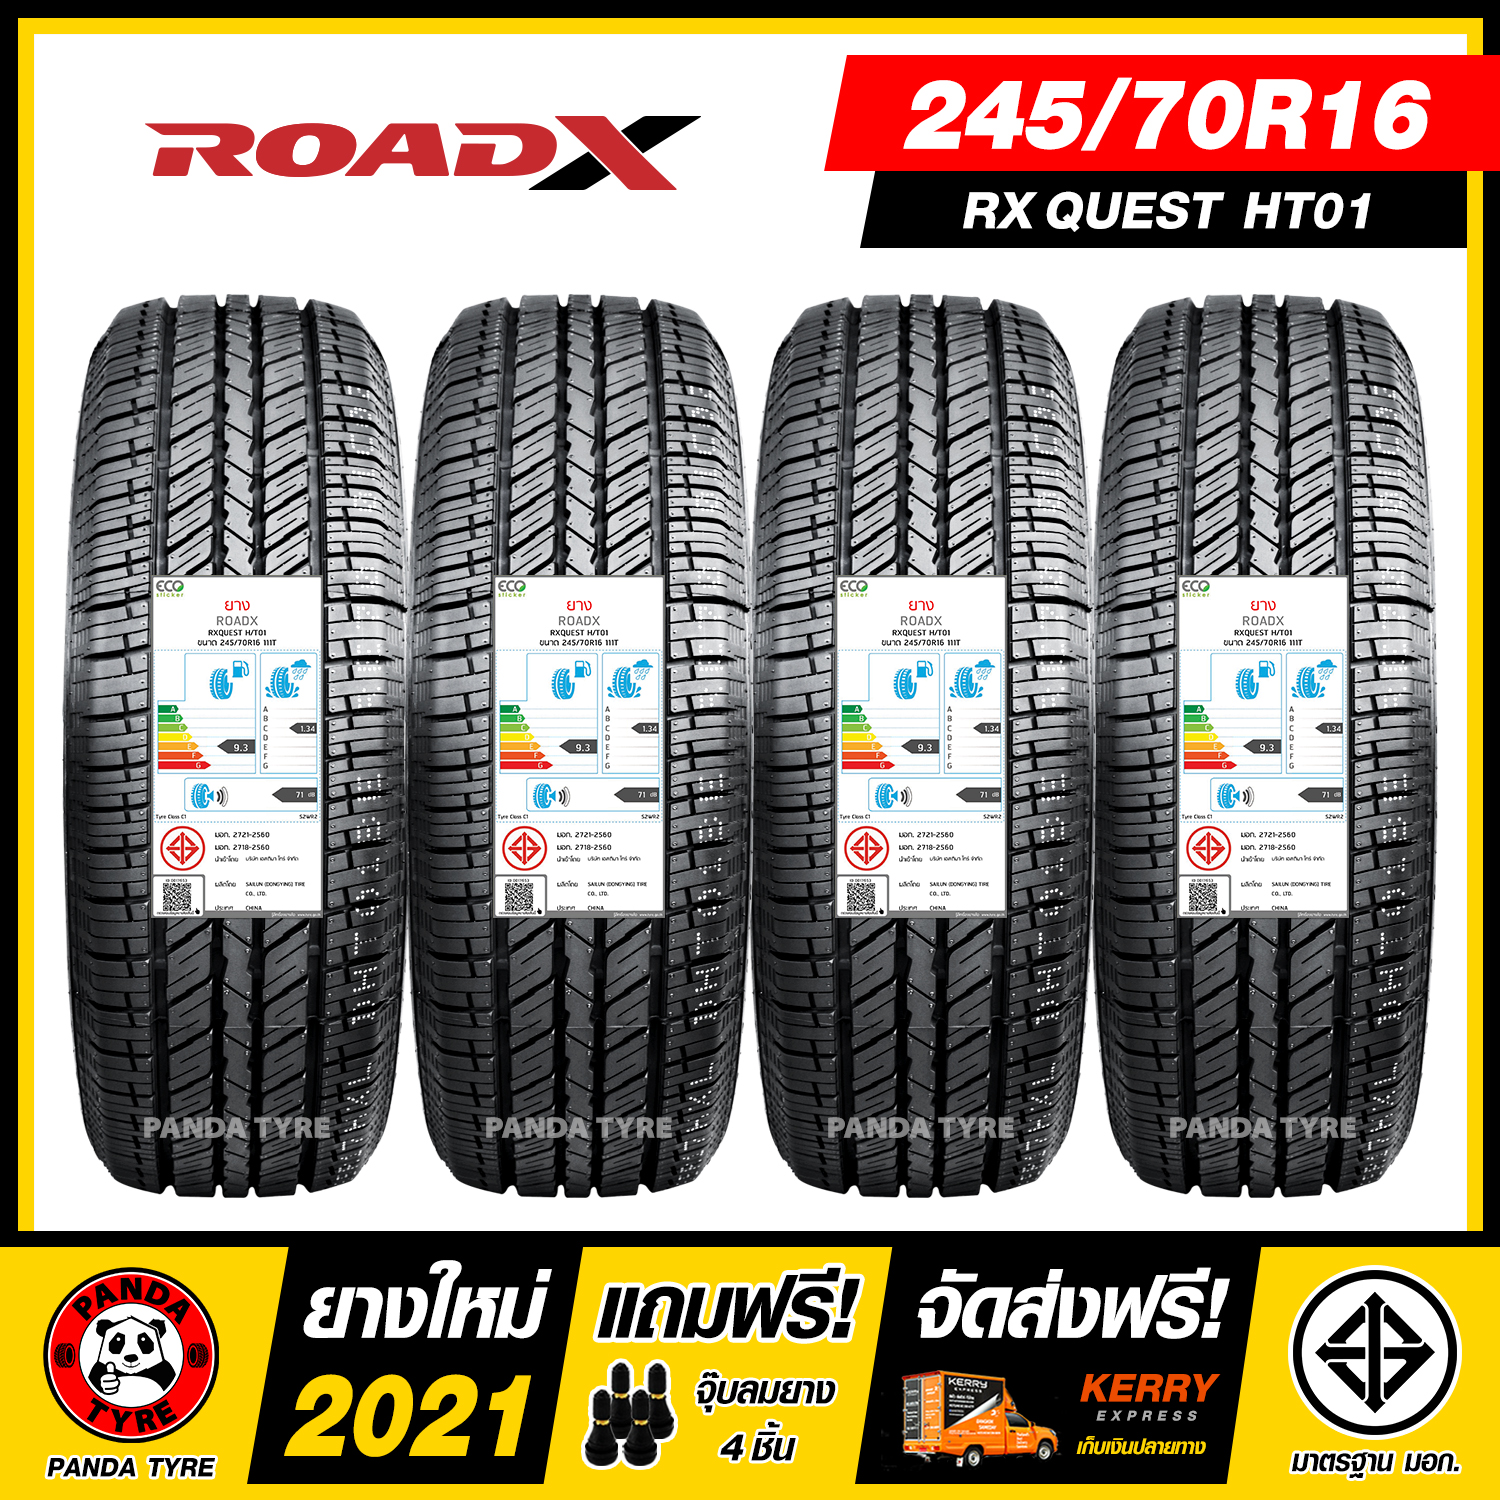 ROADX 245/70R16 ยางรถยนต์ขอบ16 รุ่น RXQUEST HT01 - 4 เส้น (ยางใหม่ผลิตปี 2021)